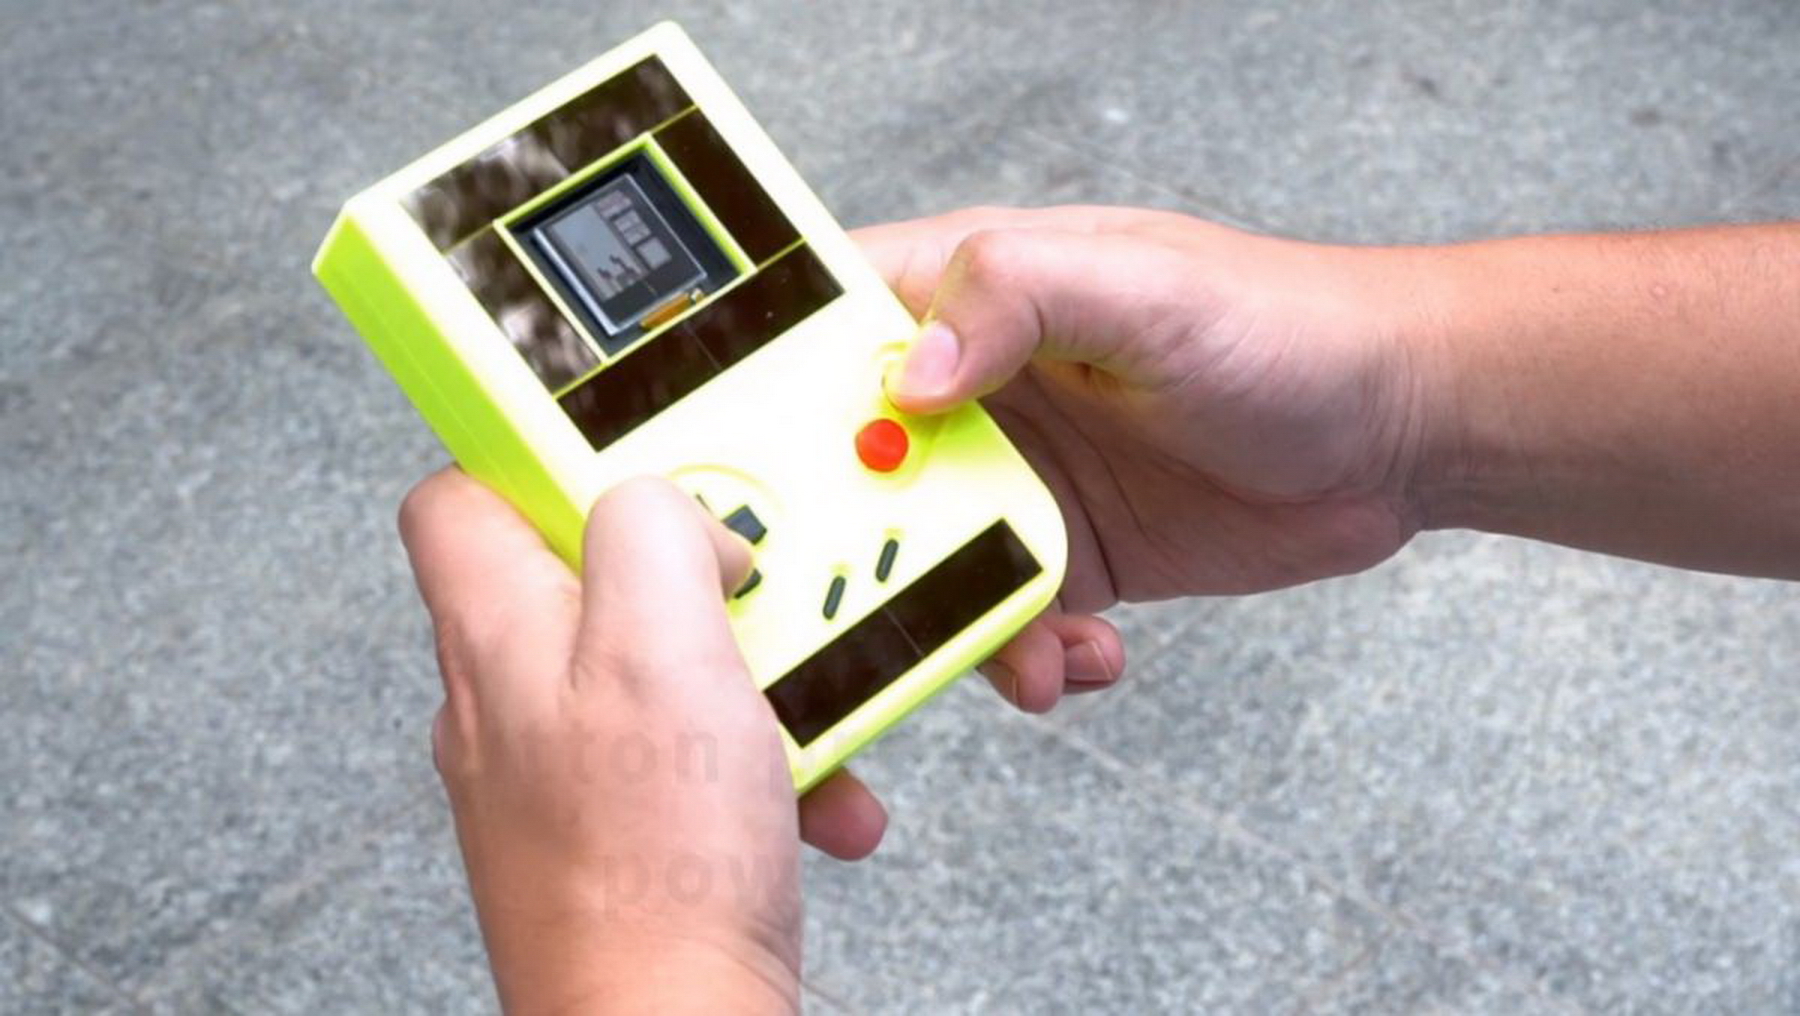 Engage外表如元祖版Game Boy，它從太陽能及按鍵收集能量，只能短暫維持開機狀態。（美國西北大學圖片）